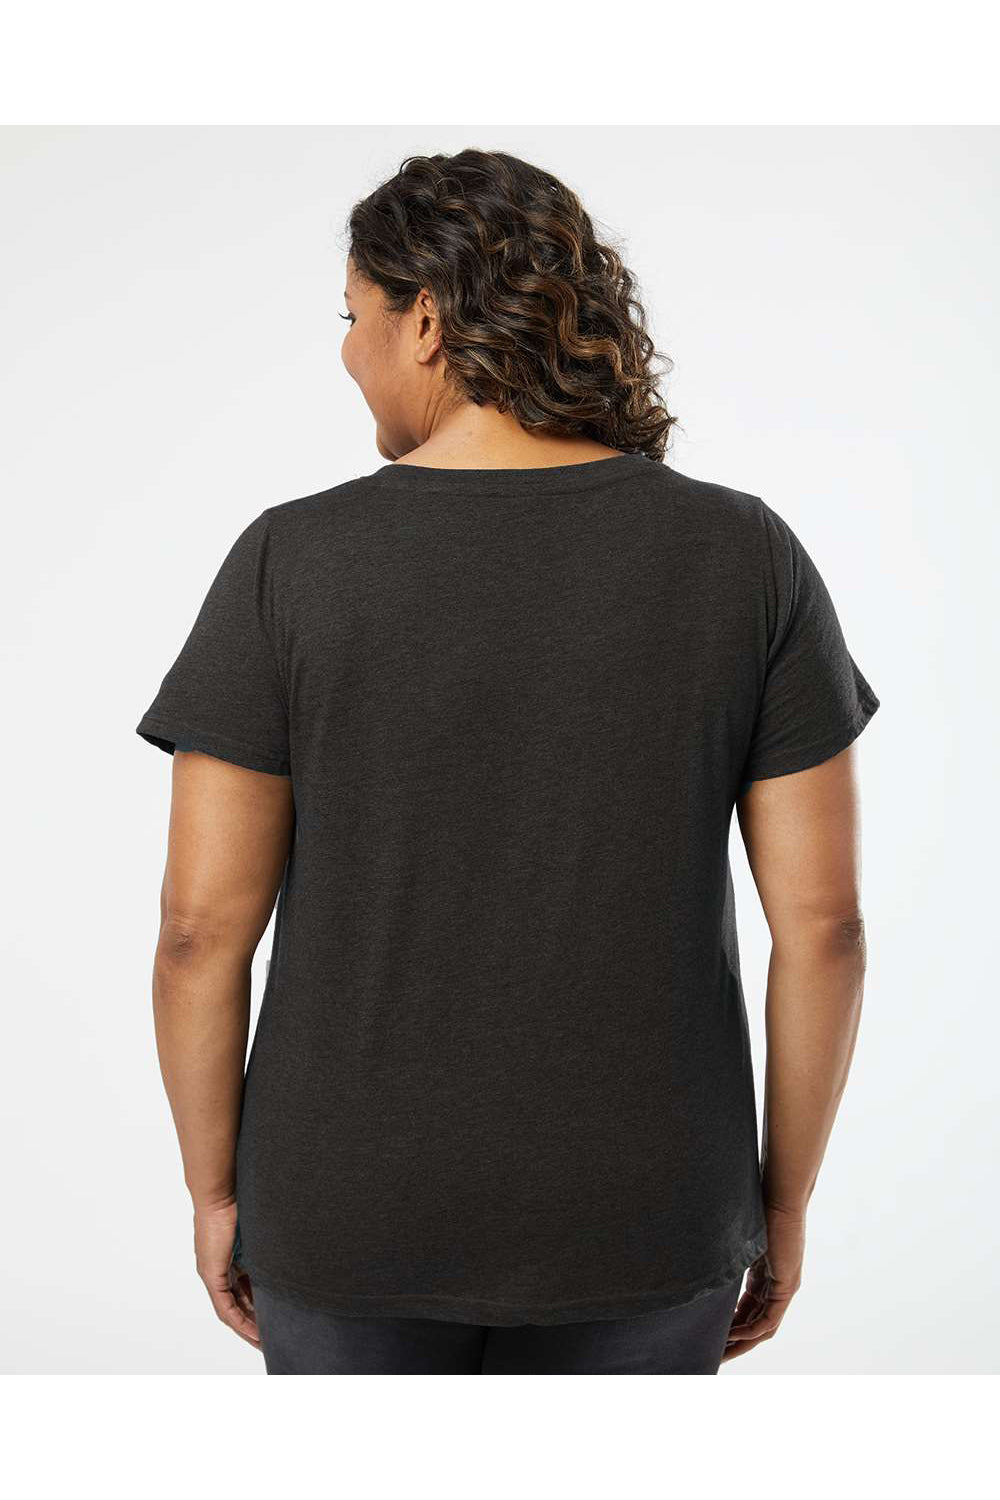 LAT 3817 Womens Curvy Collection Fine Jersey Short Sleeve V-Neck T-Shirt Vintage Smoke Grey Model Back